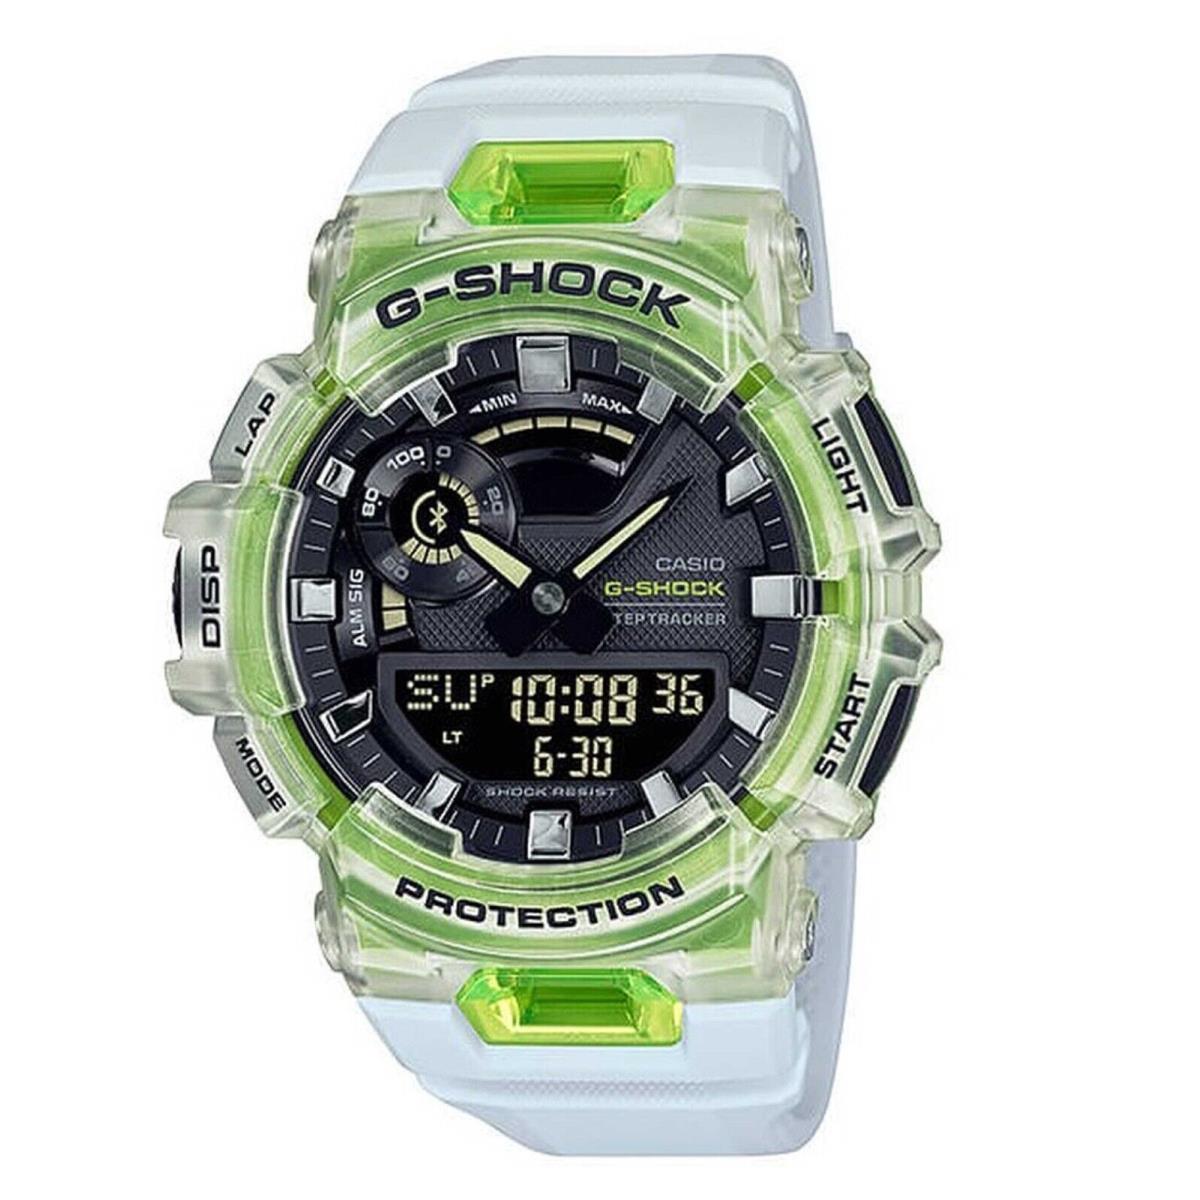 Casio G-shock GBA900SM-7A9 G-squad Vital Bright Clear Green Limited Watch